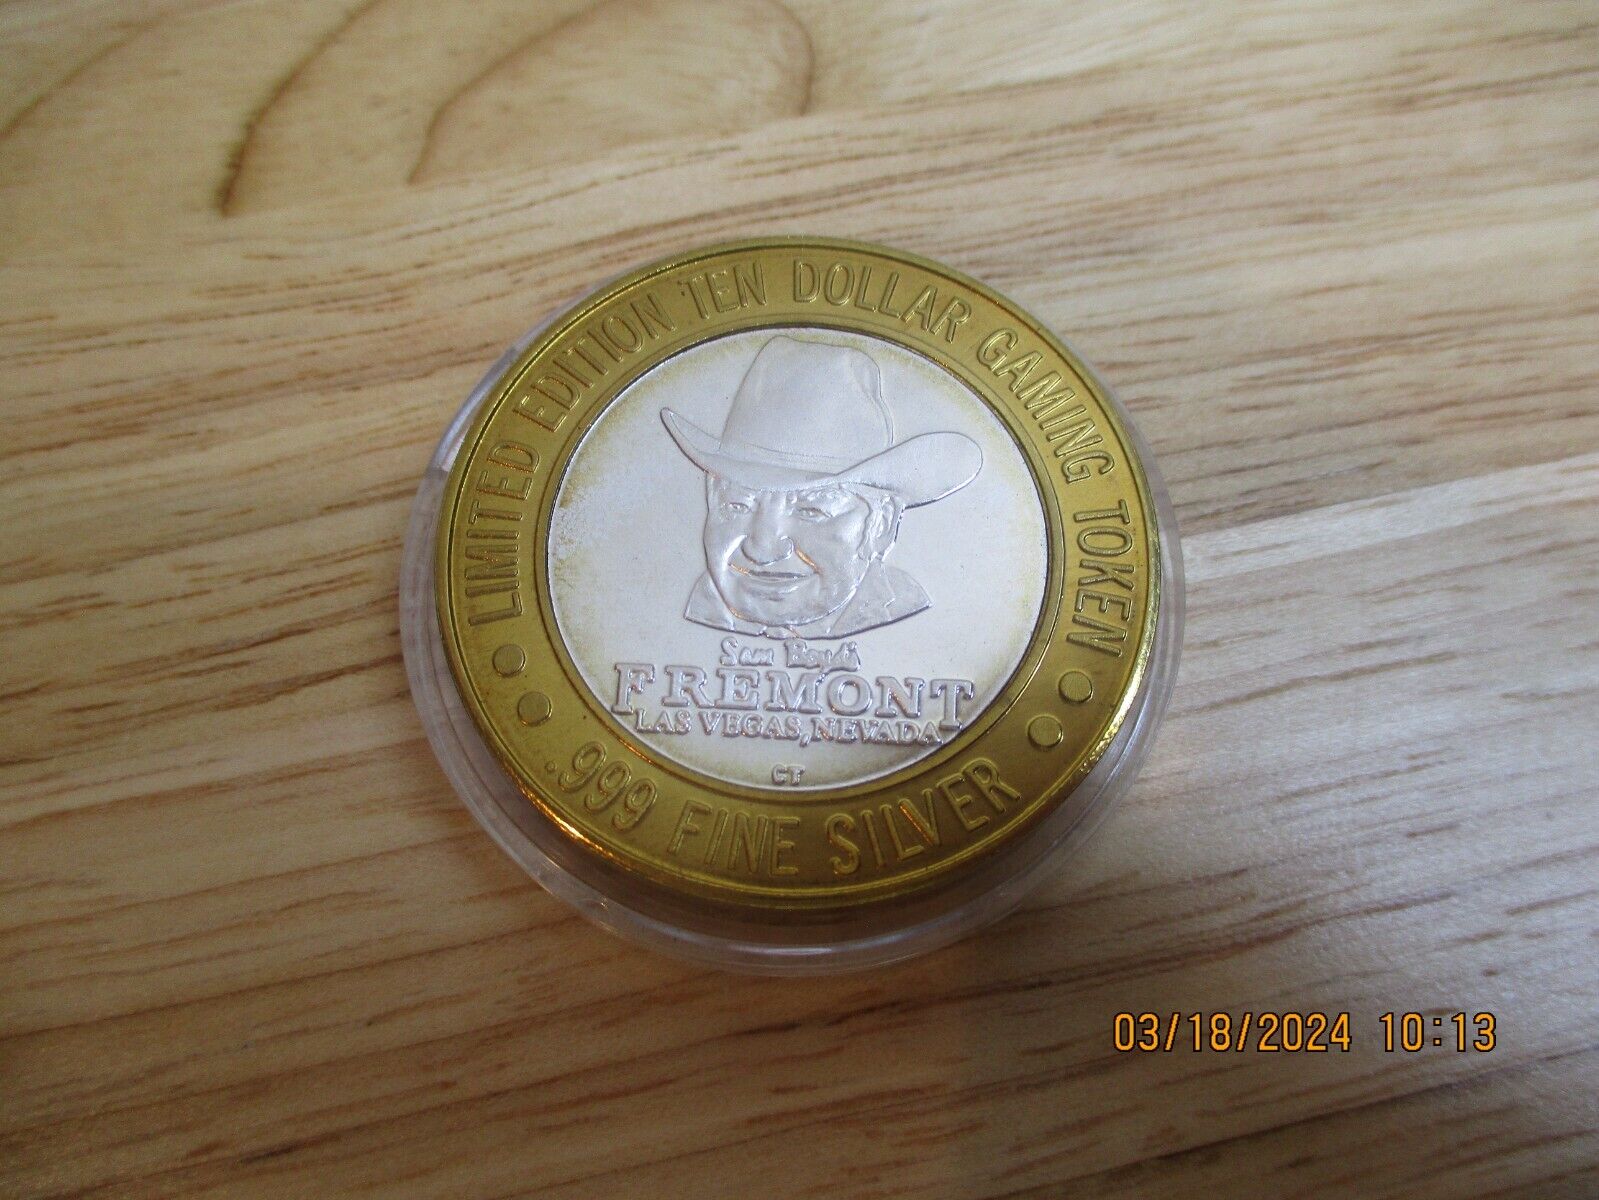 EXCELLENT Fremont Casino Ten Dollar Casino Gaming Token Coin .999 Silver-R0-1163